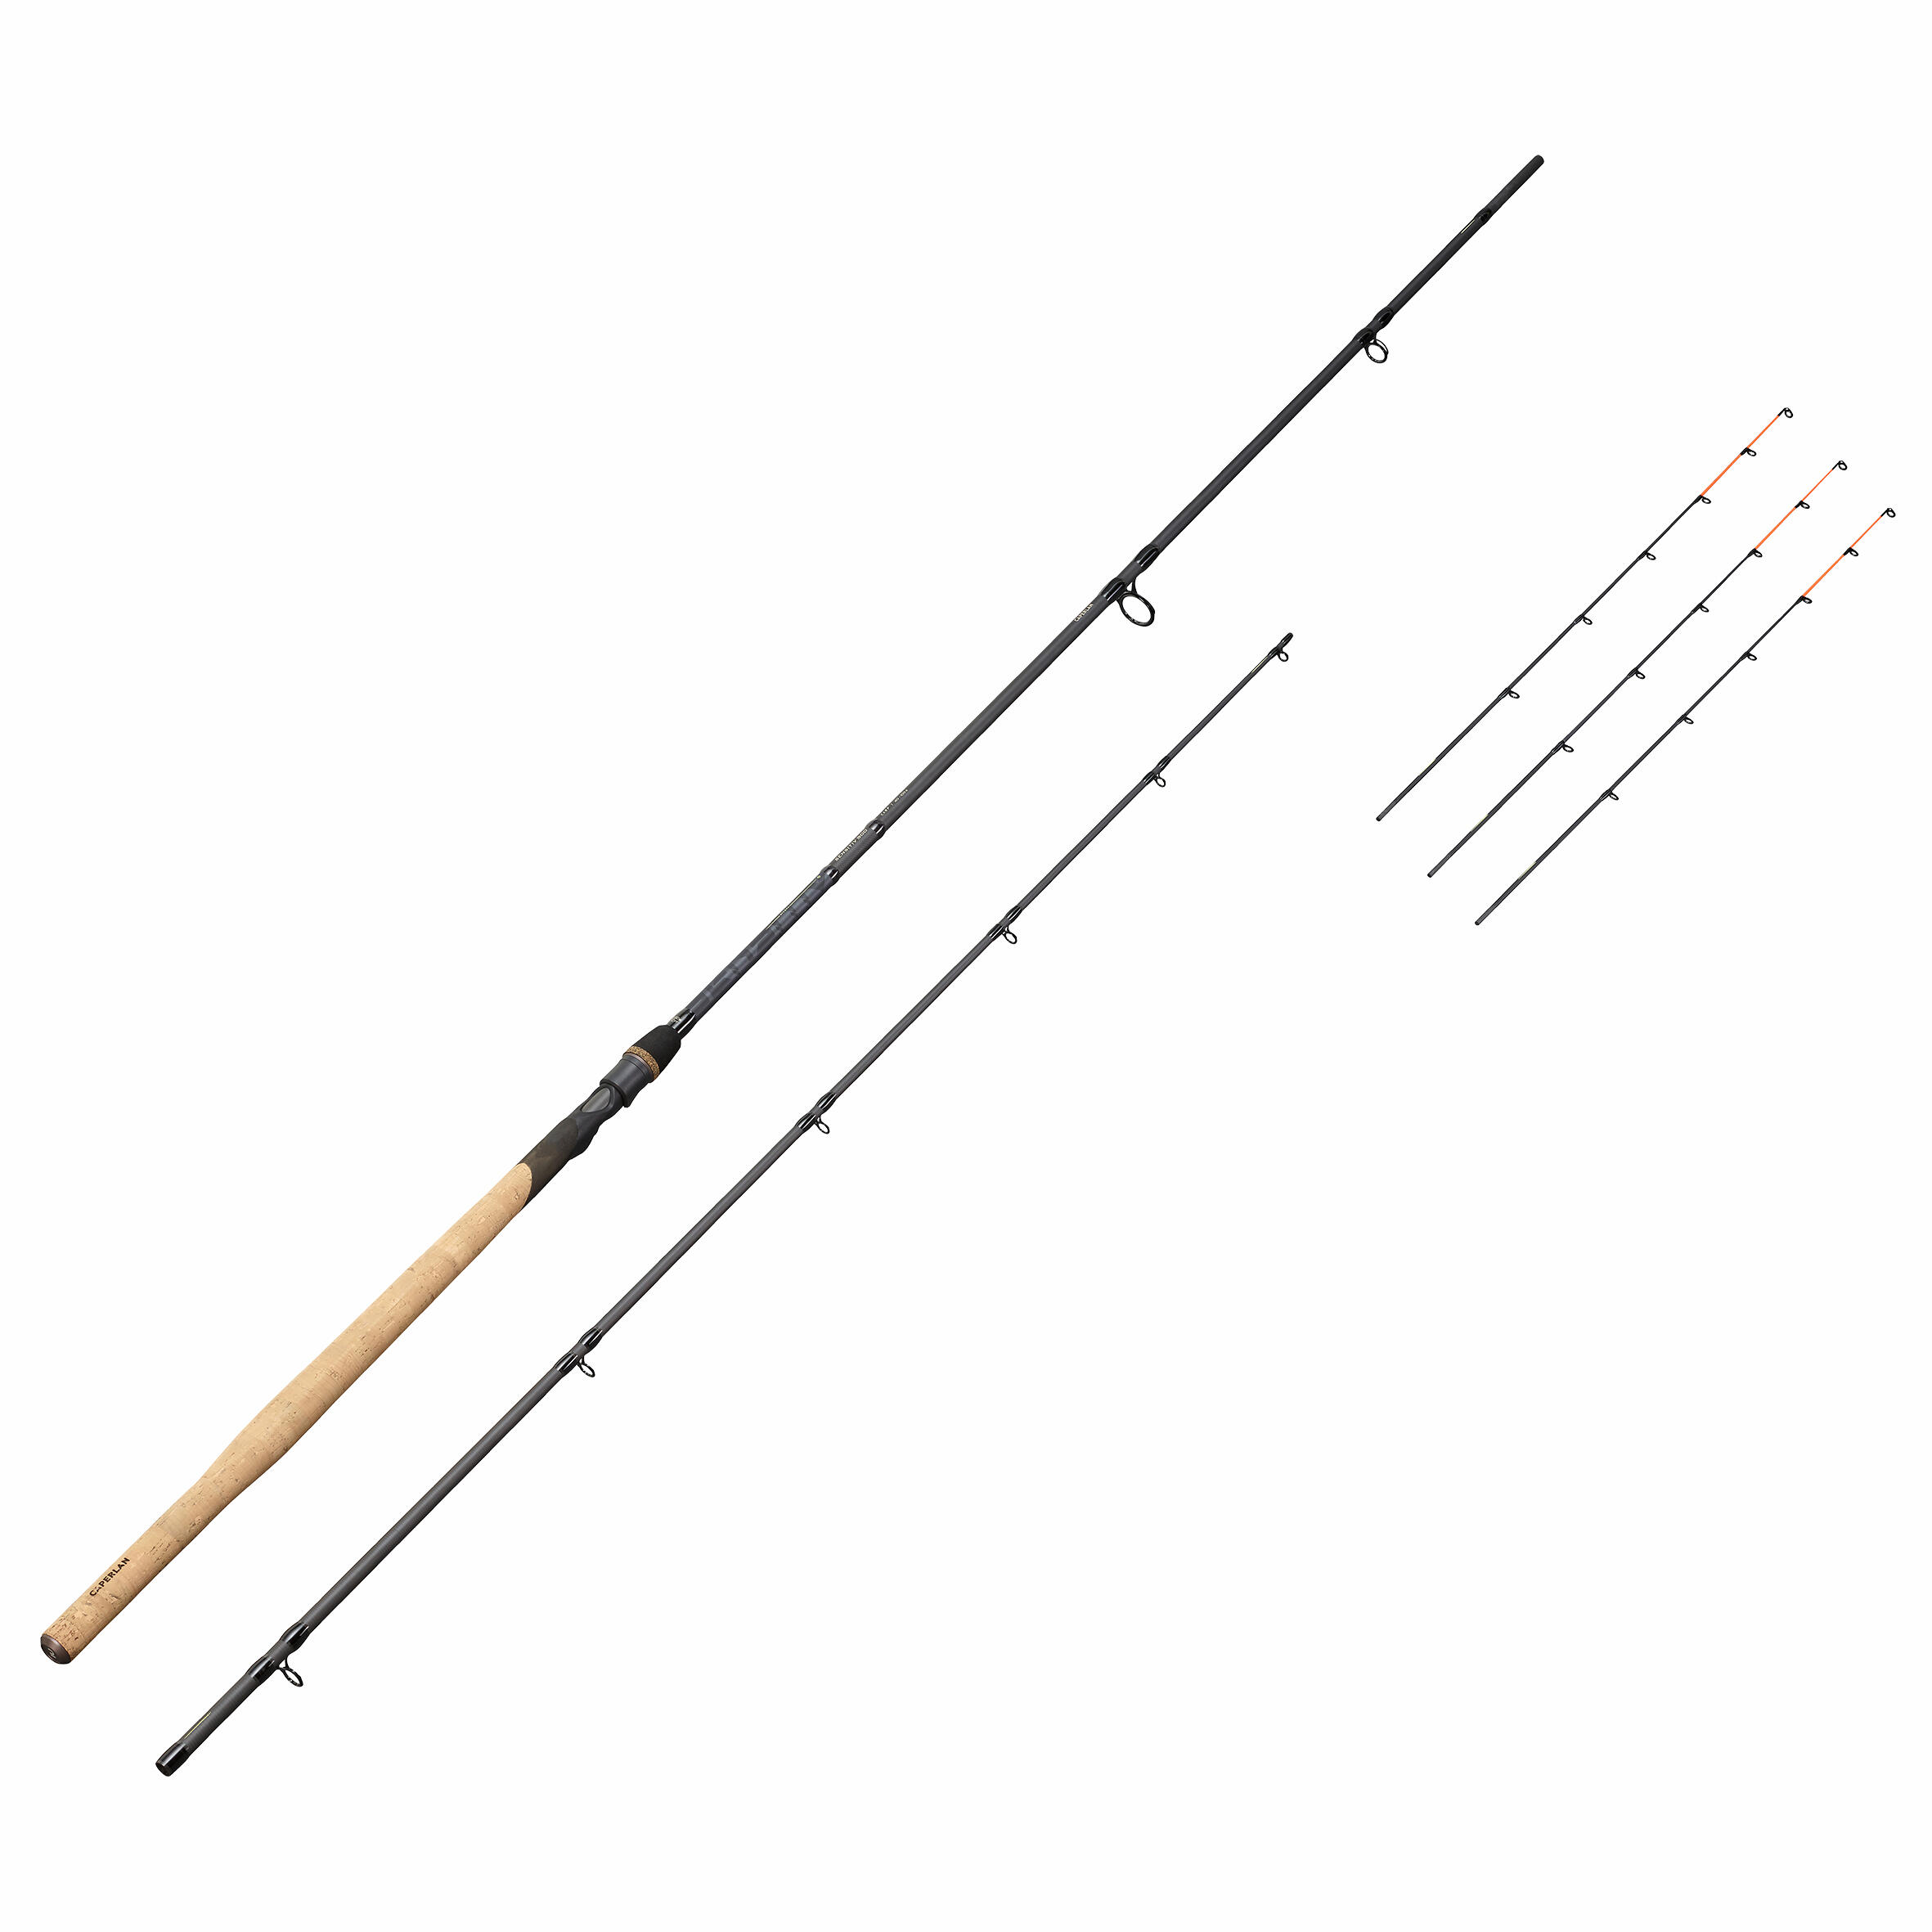 Feeder carp fishing rod SENSITIV 500 carp 40 g-100 g in size 3.60